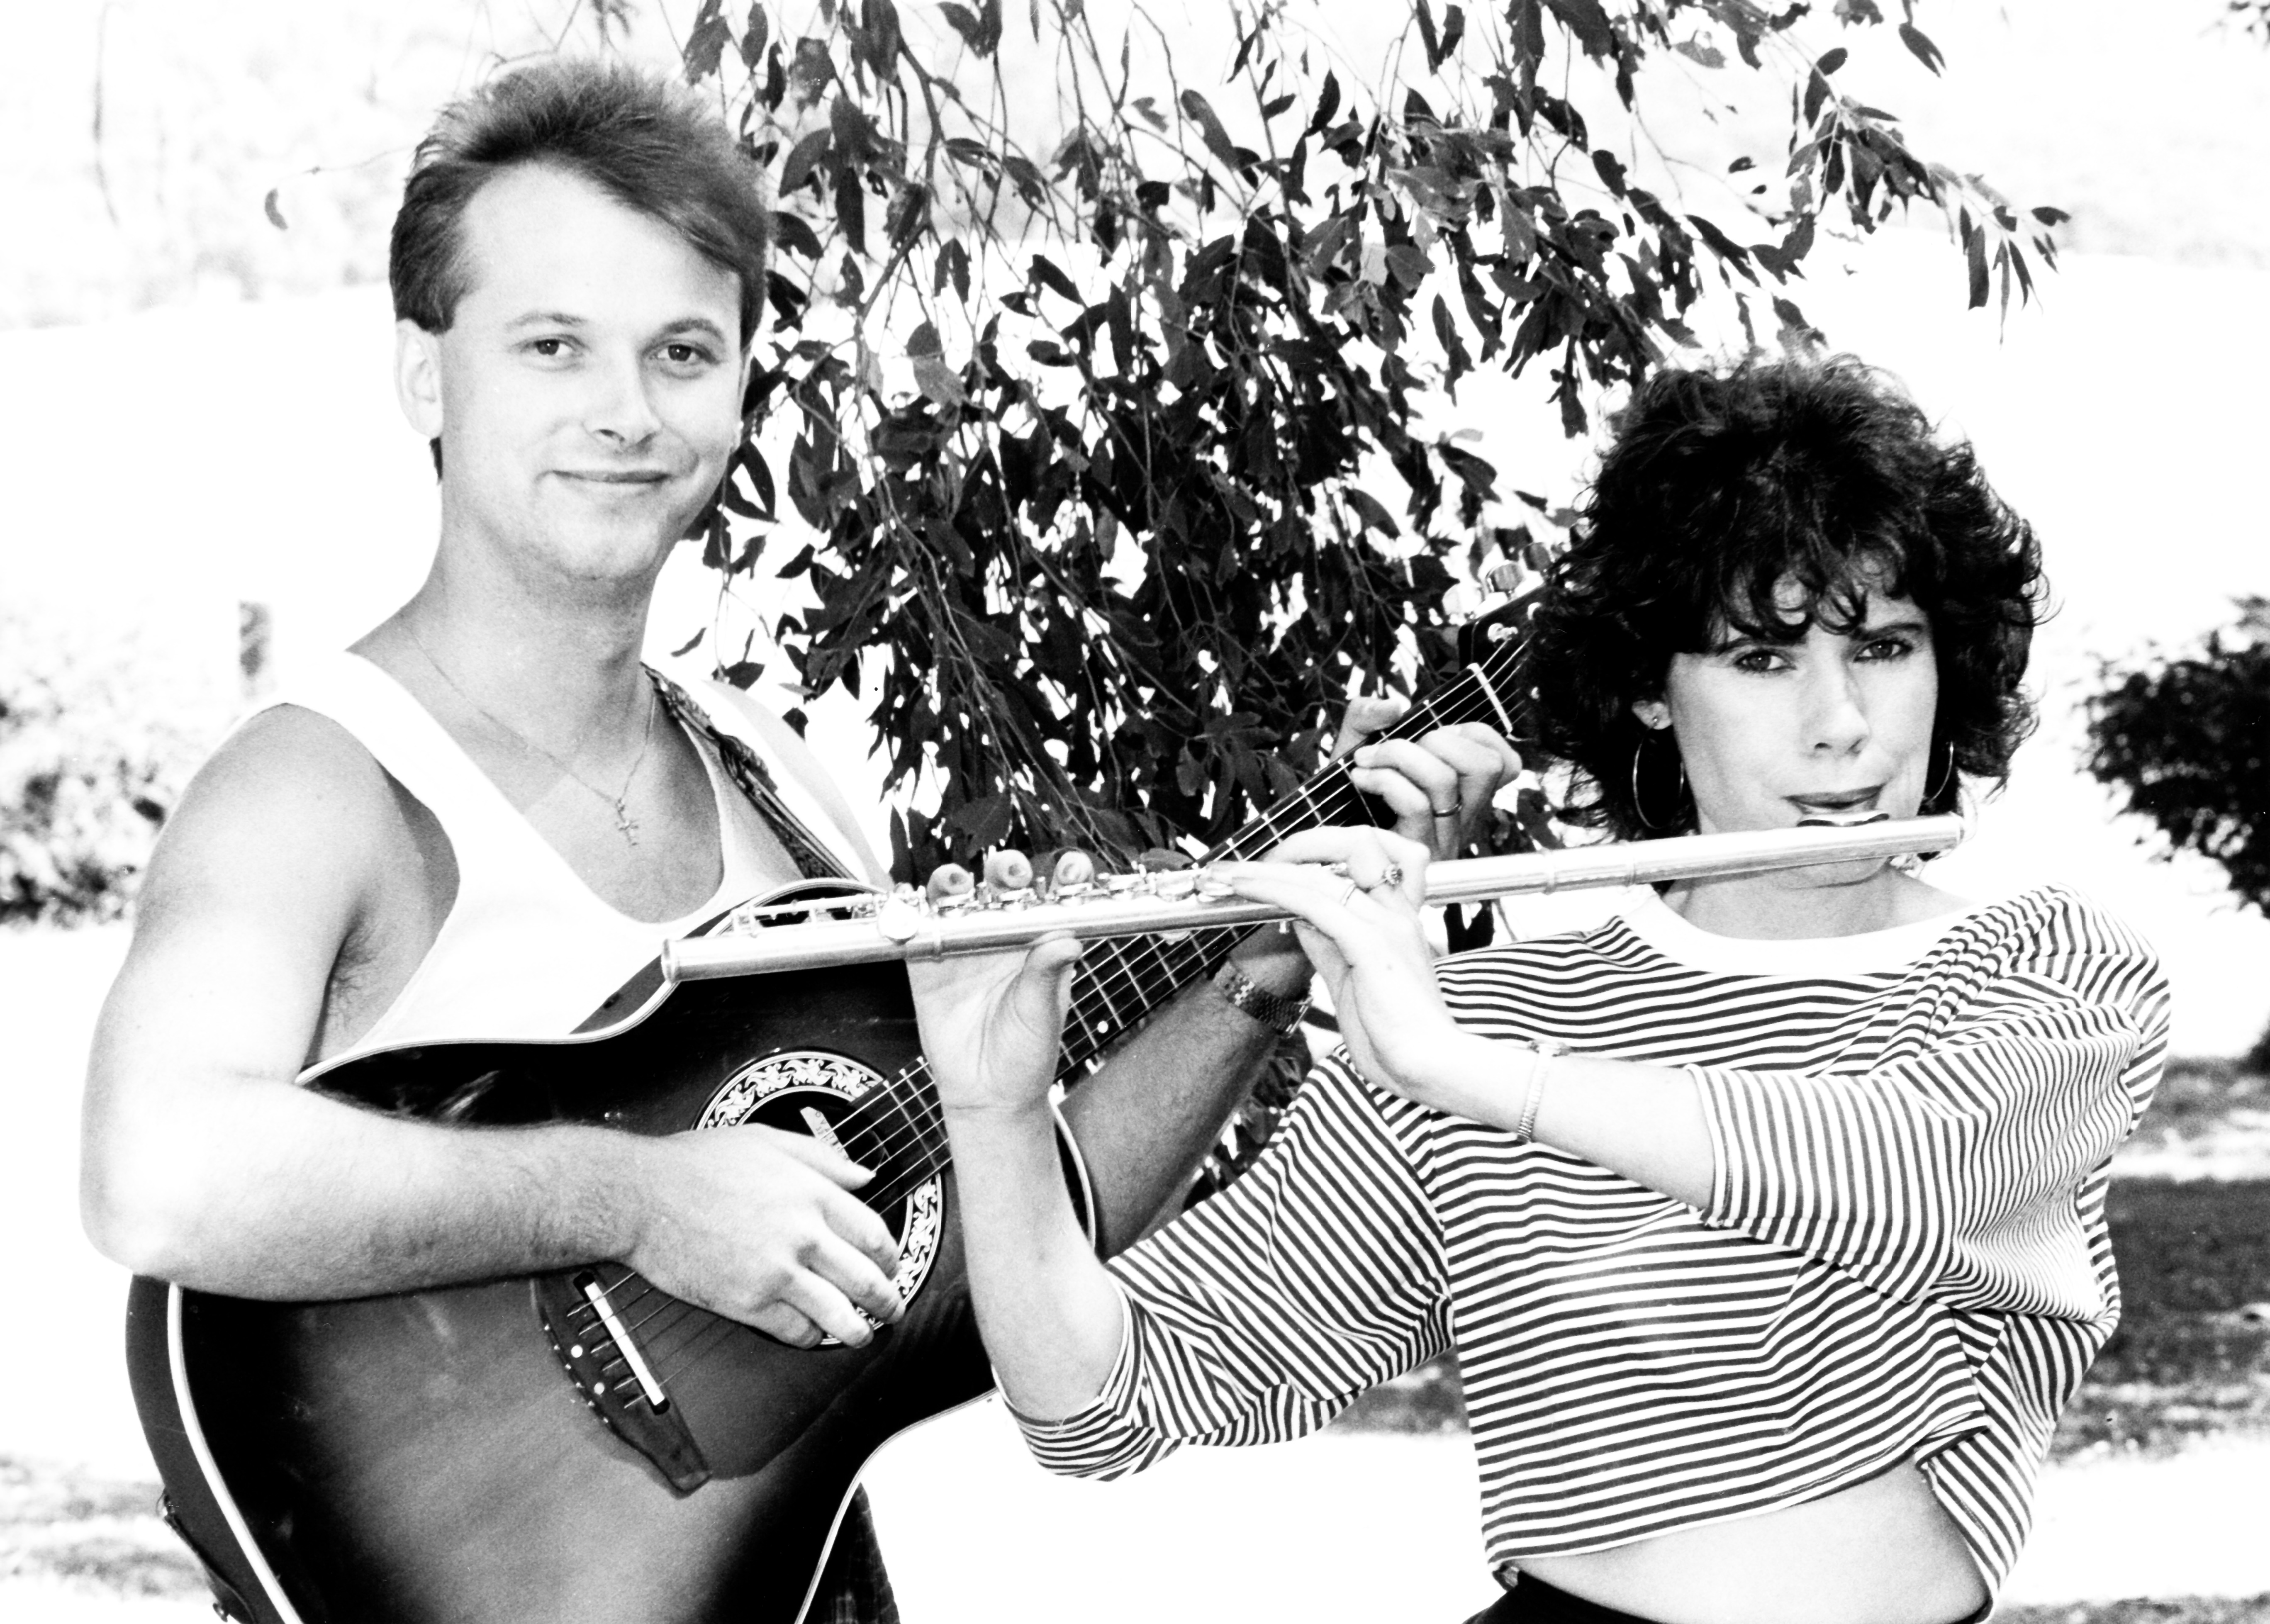 Dave Long and Trish Long 'Sahara' Australia 88